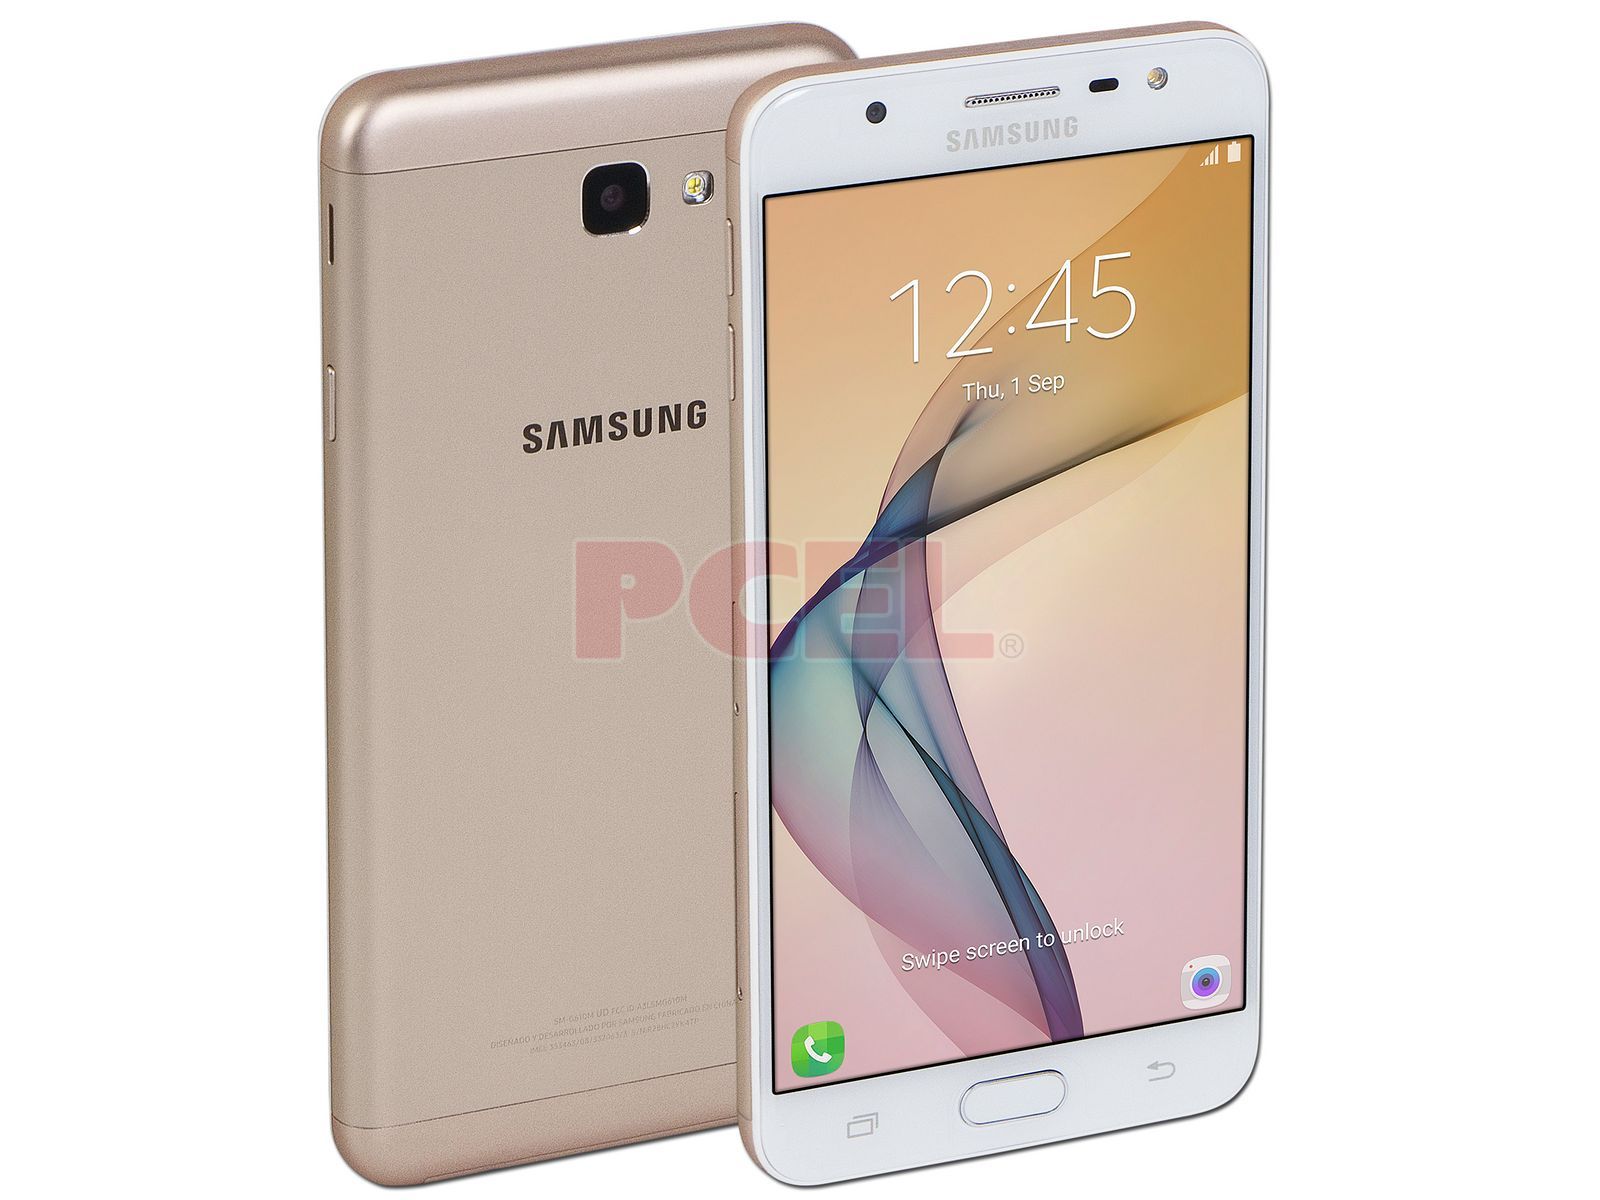 Smartphone Samsung Galaxy J7 Prime: Procesador Octa Core ( GHz), RAM de  3GB, Almacenamiento de 16GB (expandible con microSD), Pantalla LED 